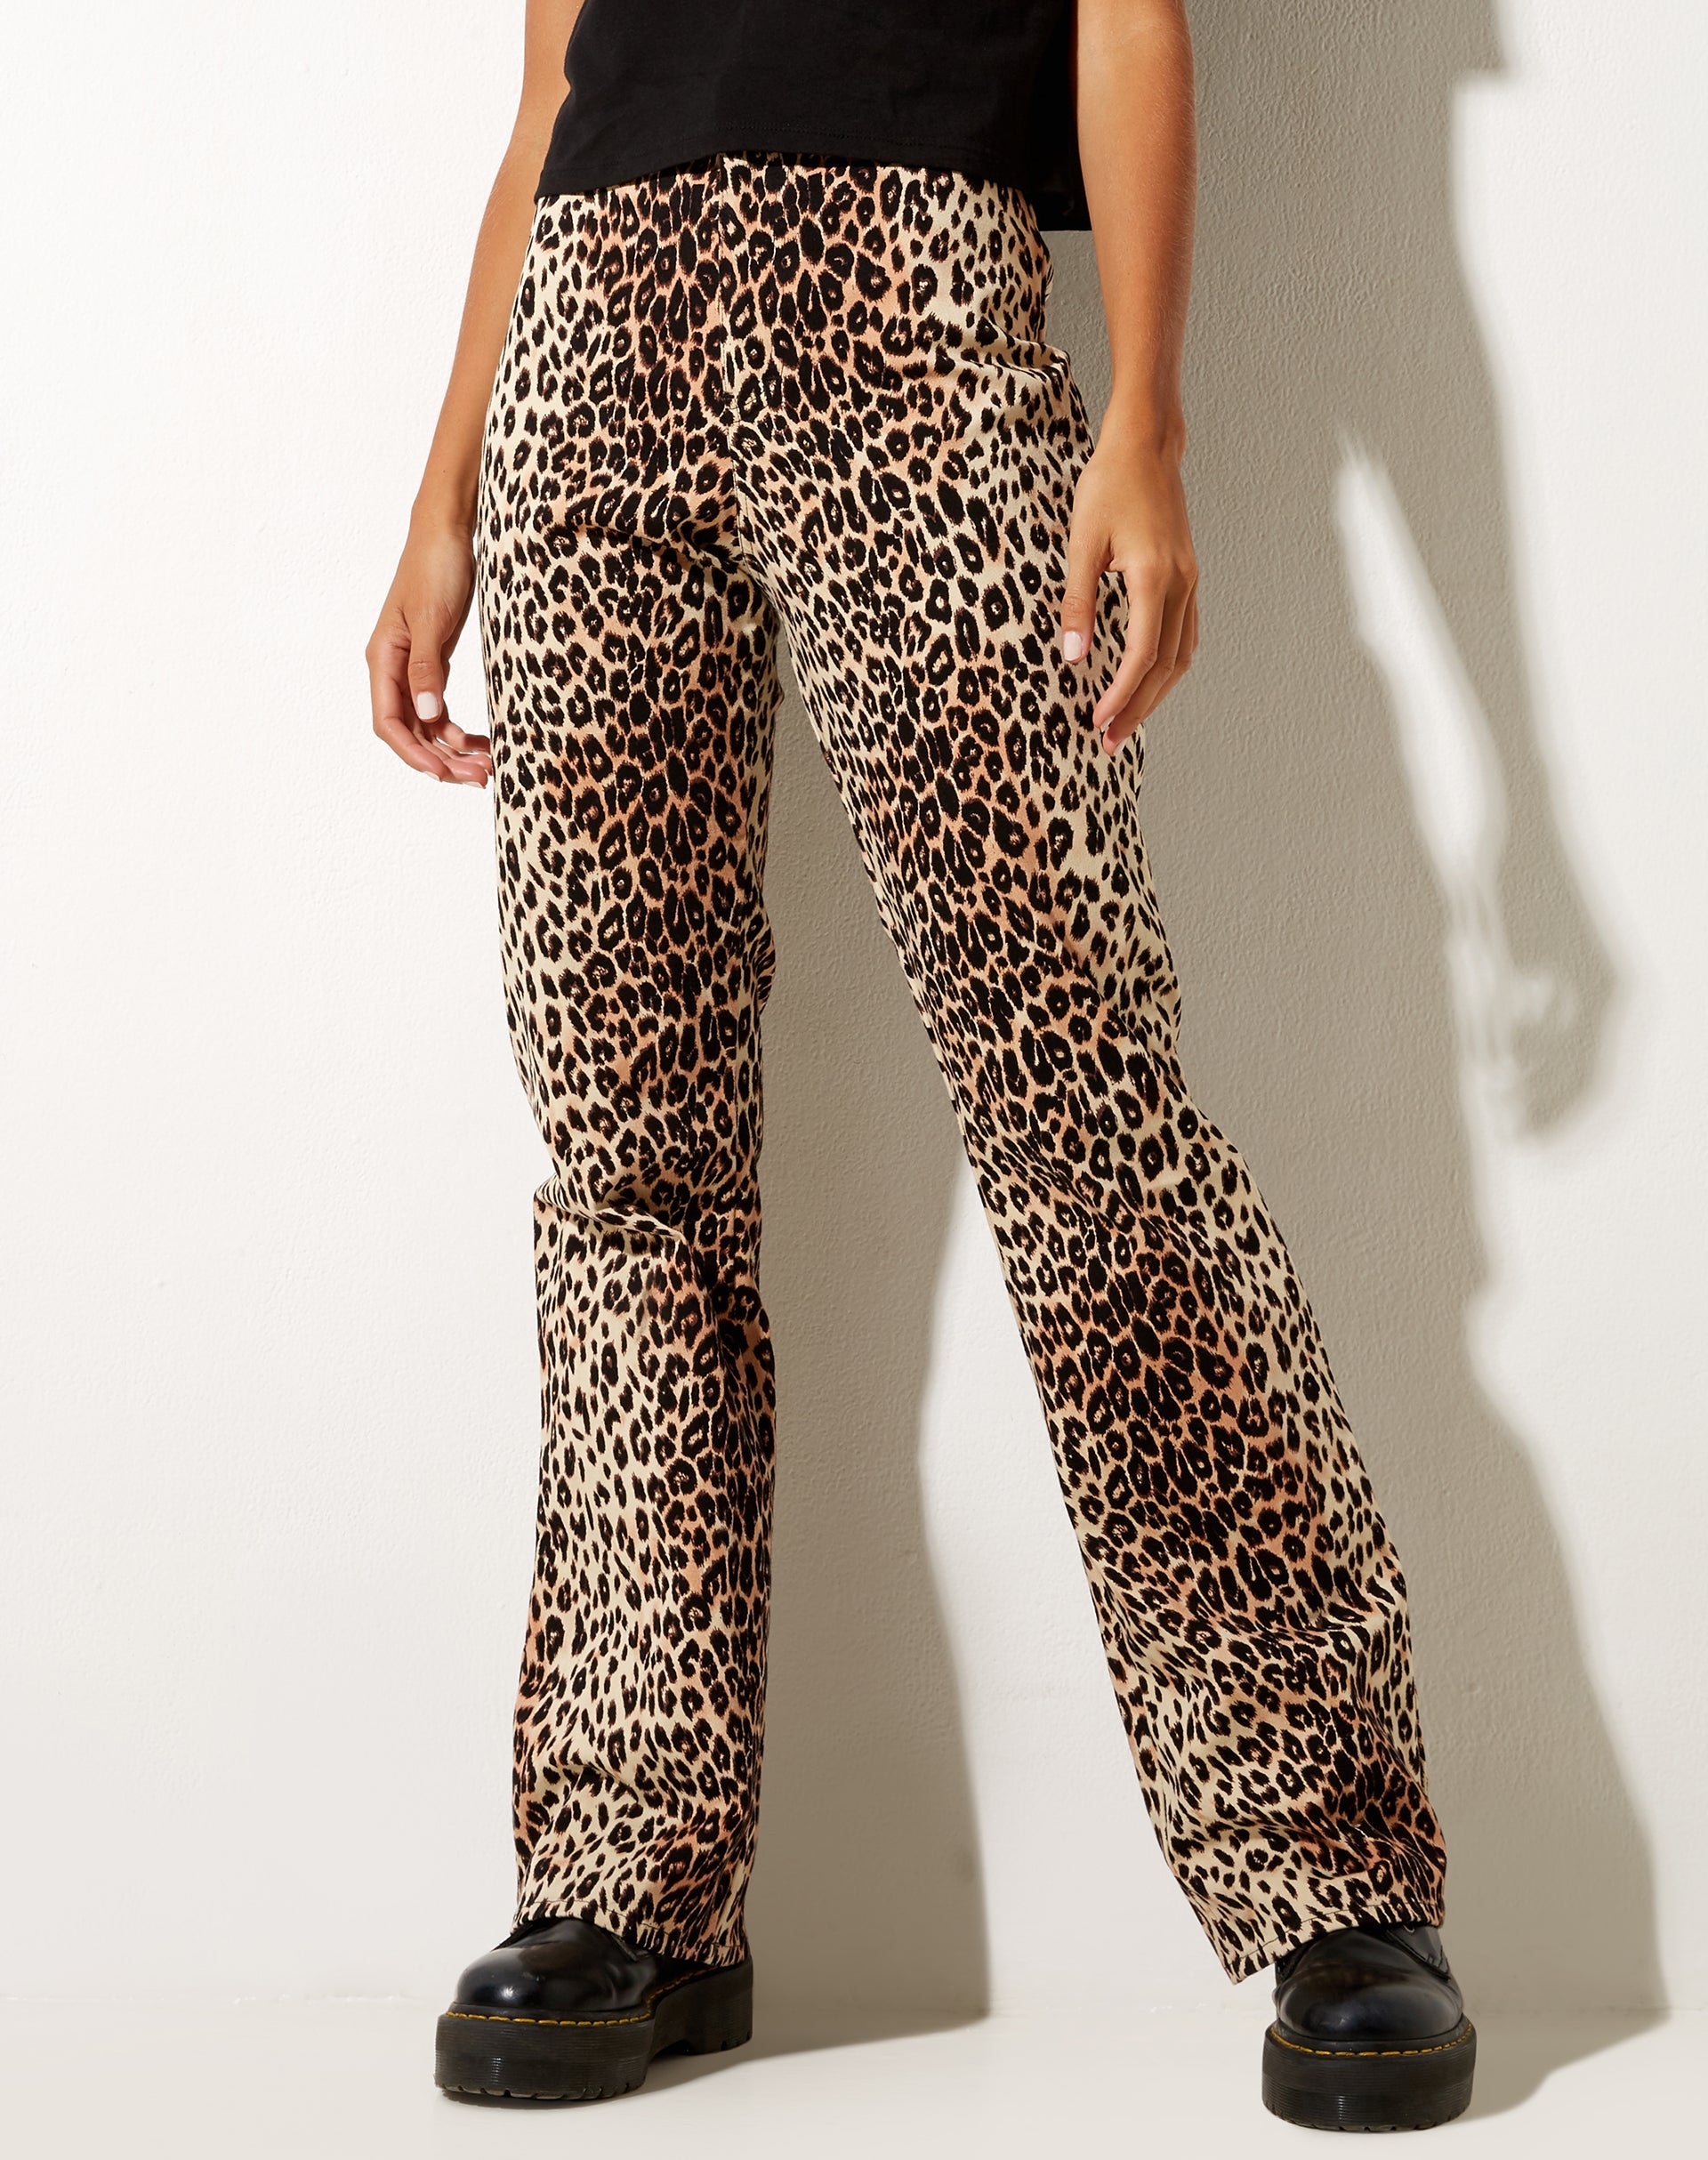 Stella pants - black cheetah - Horsefeathers